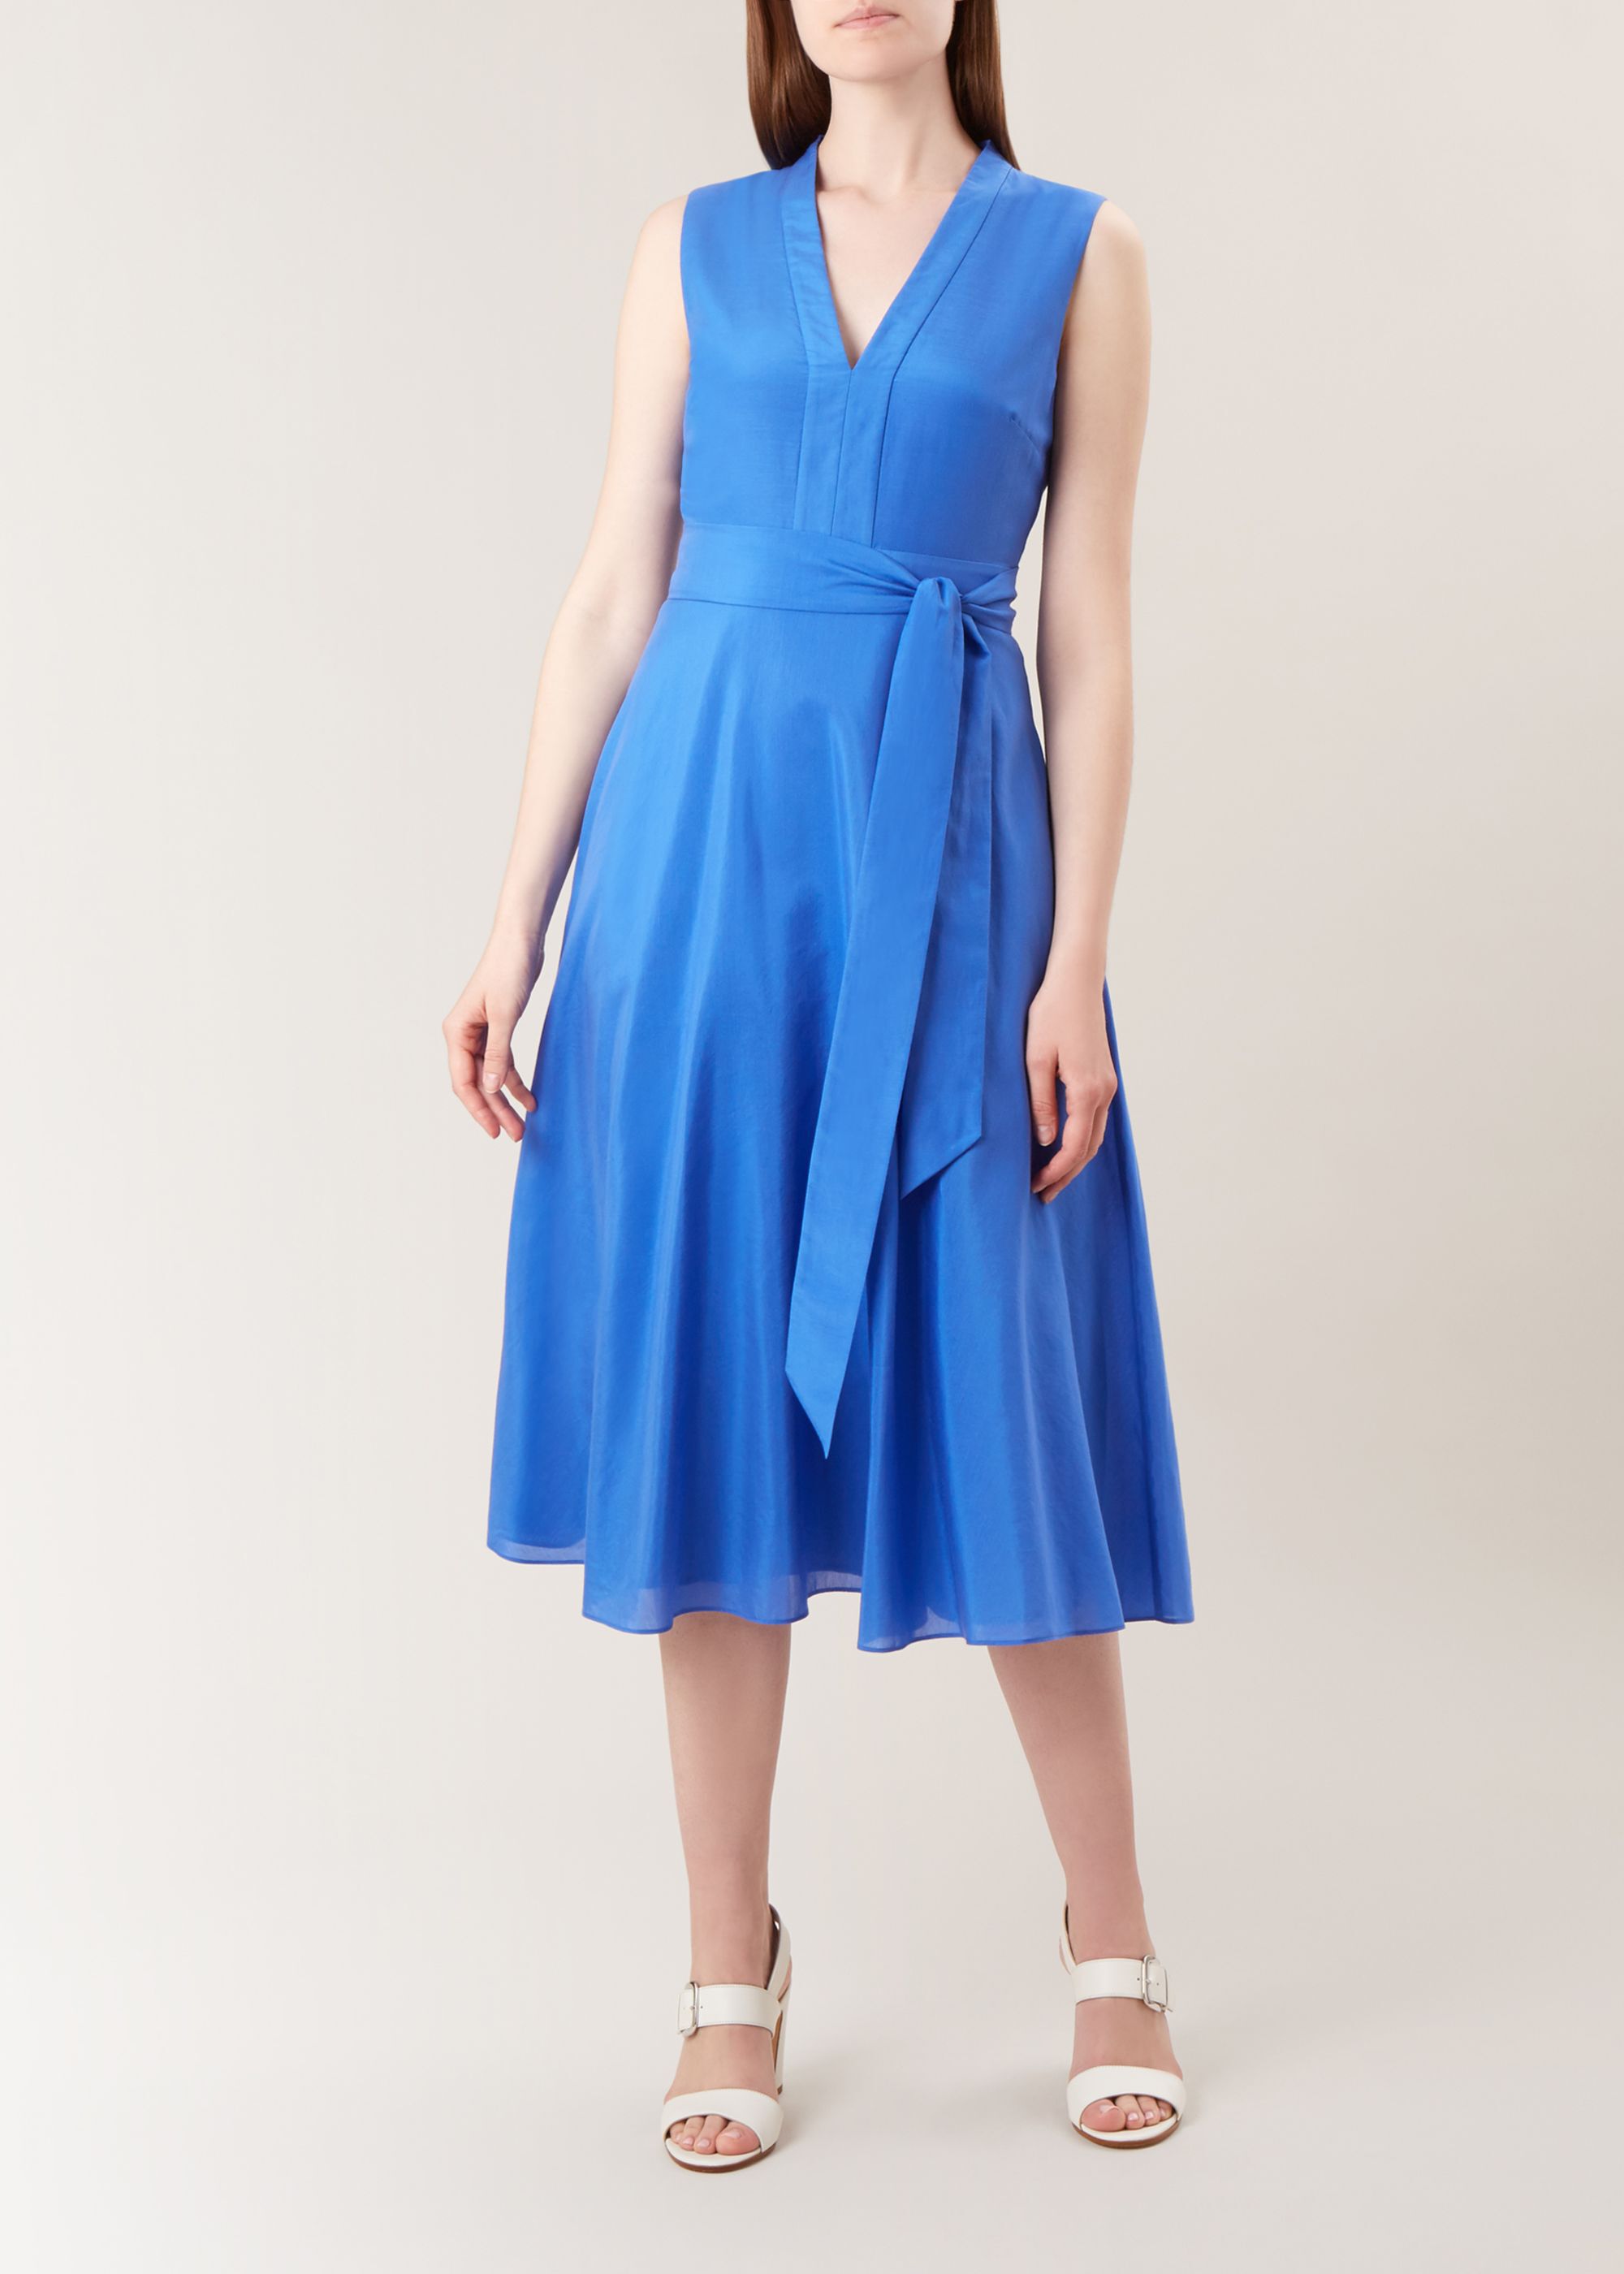 hobbs cornflower blue dress